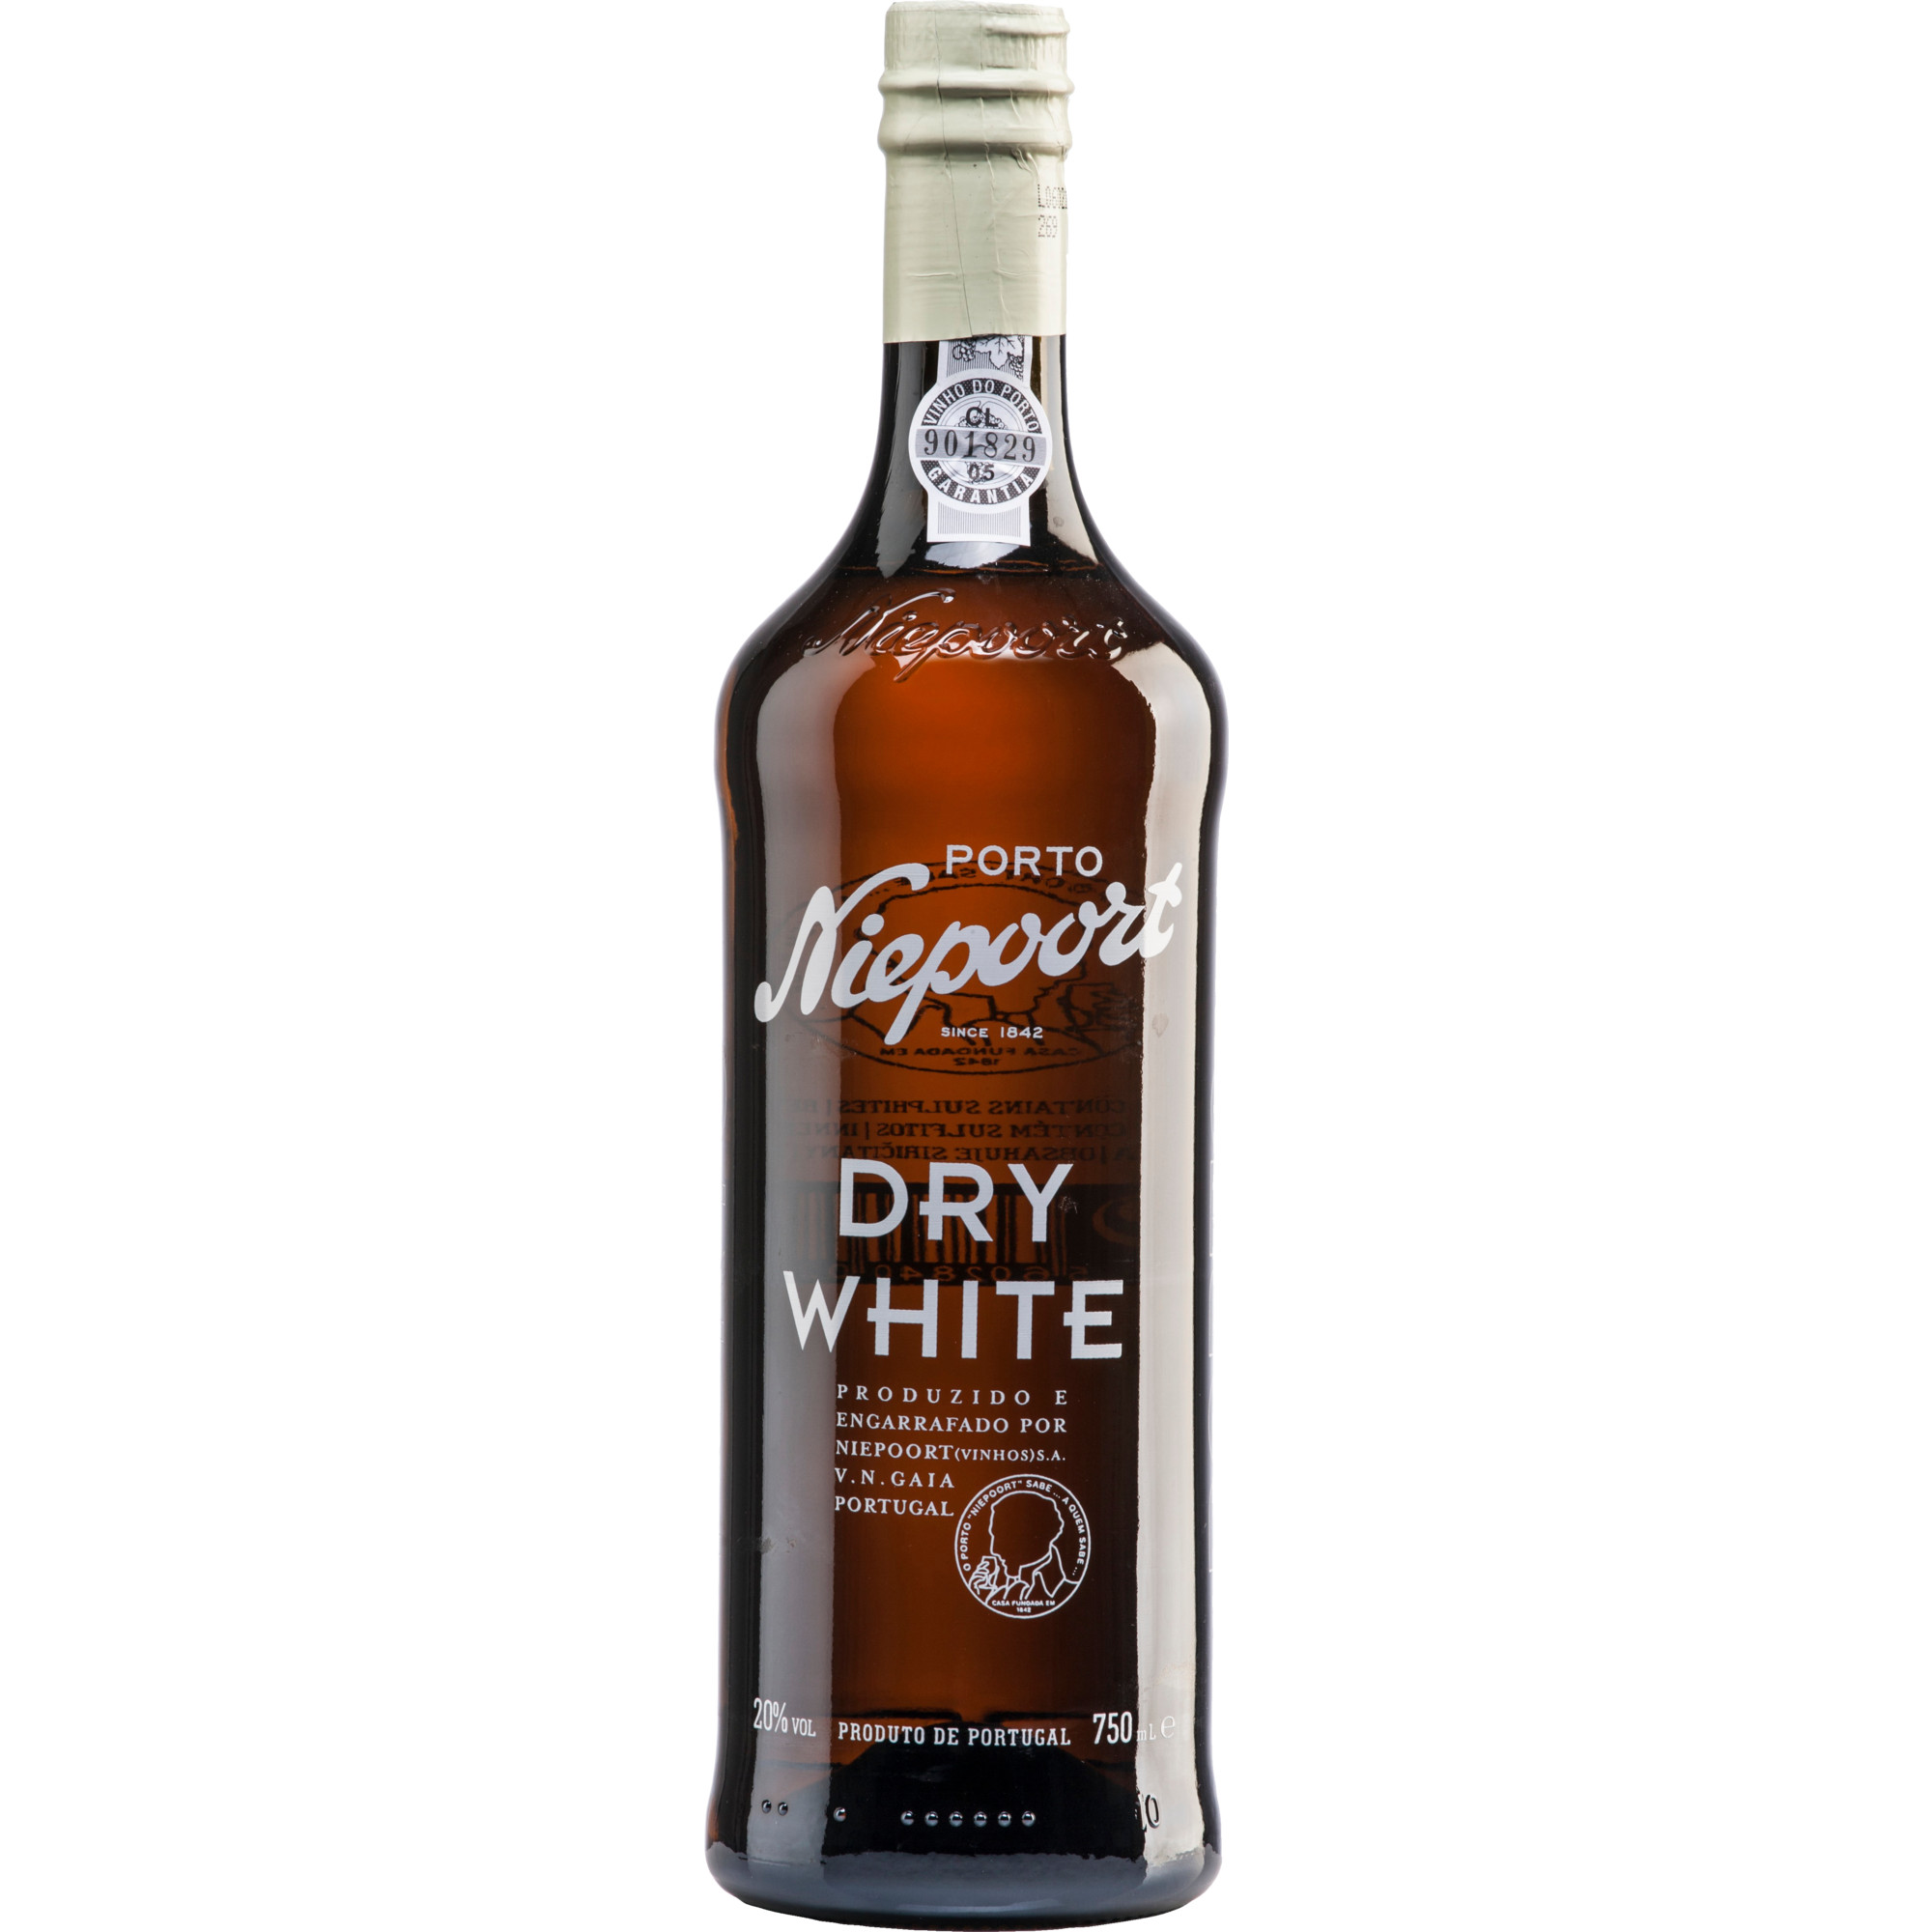 Niepoort Port Dry White, Vinho do Port DOC, 19,5 % Vol., 0,75 L, Douro, Spirituosen  Spirituosen Hawesko